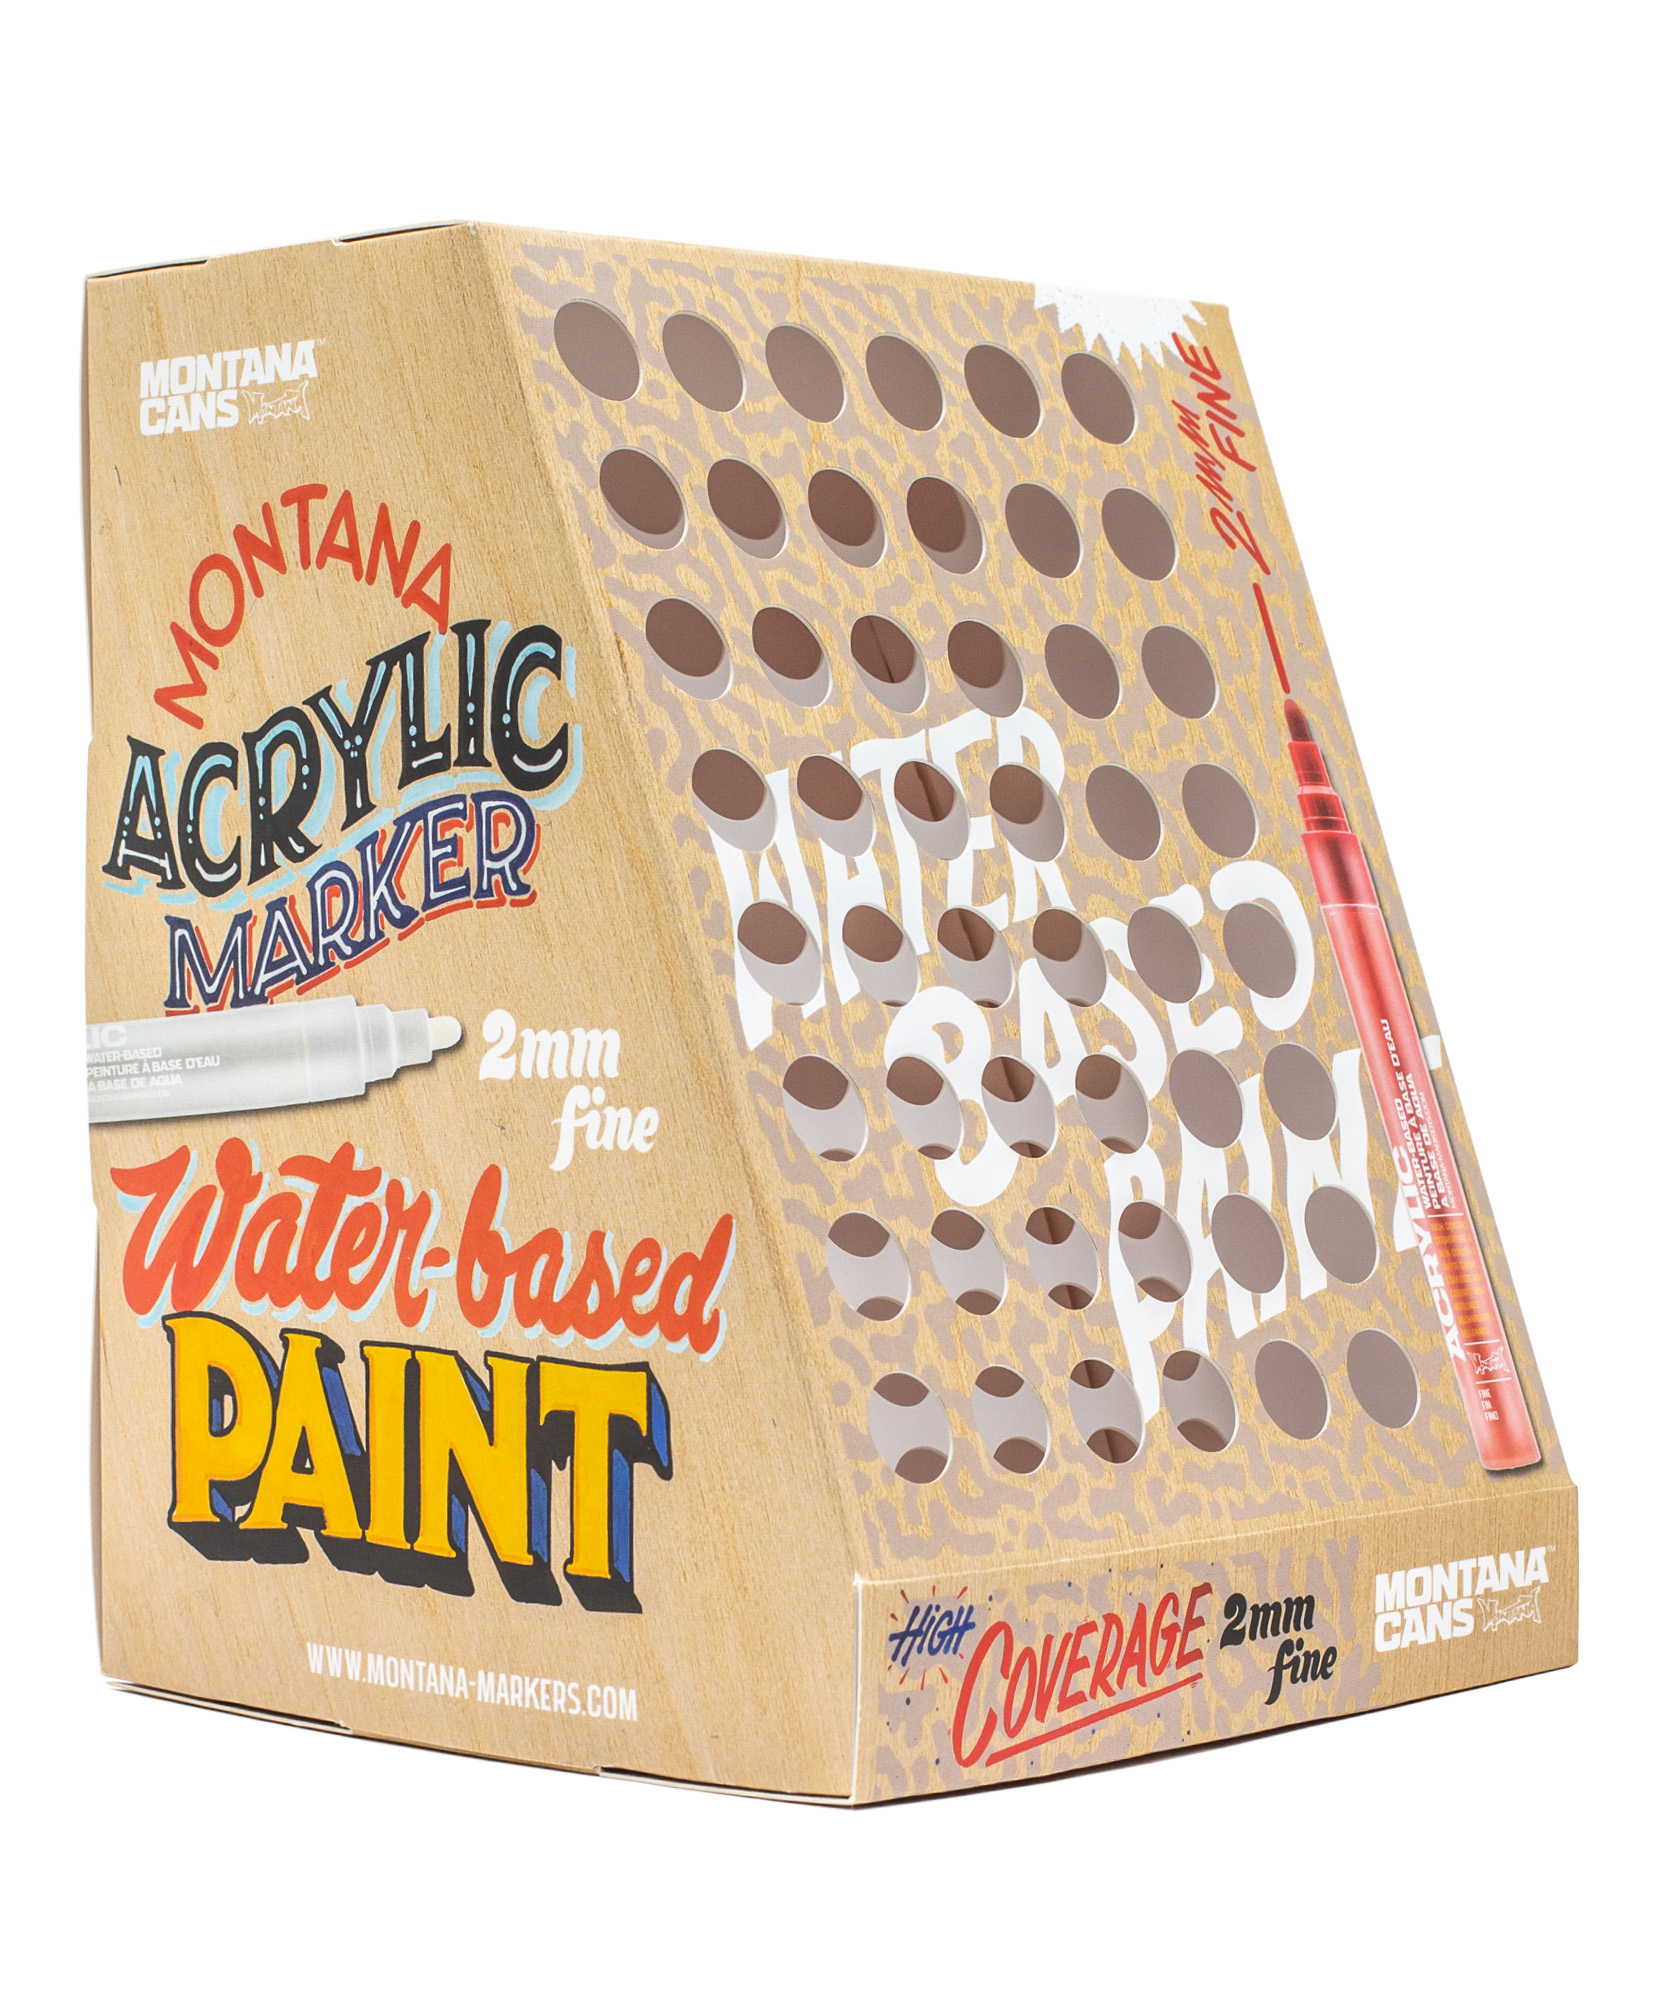 Montana Acrylic Markers - Artist & Craftsman Supply